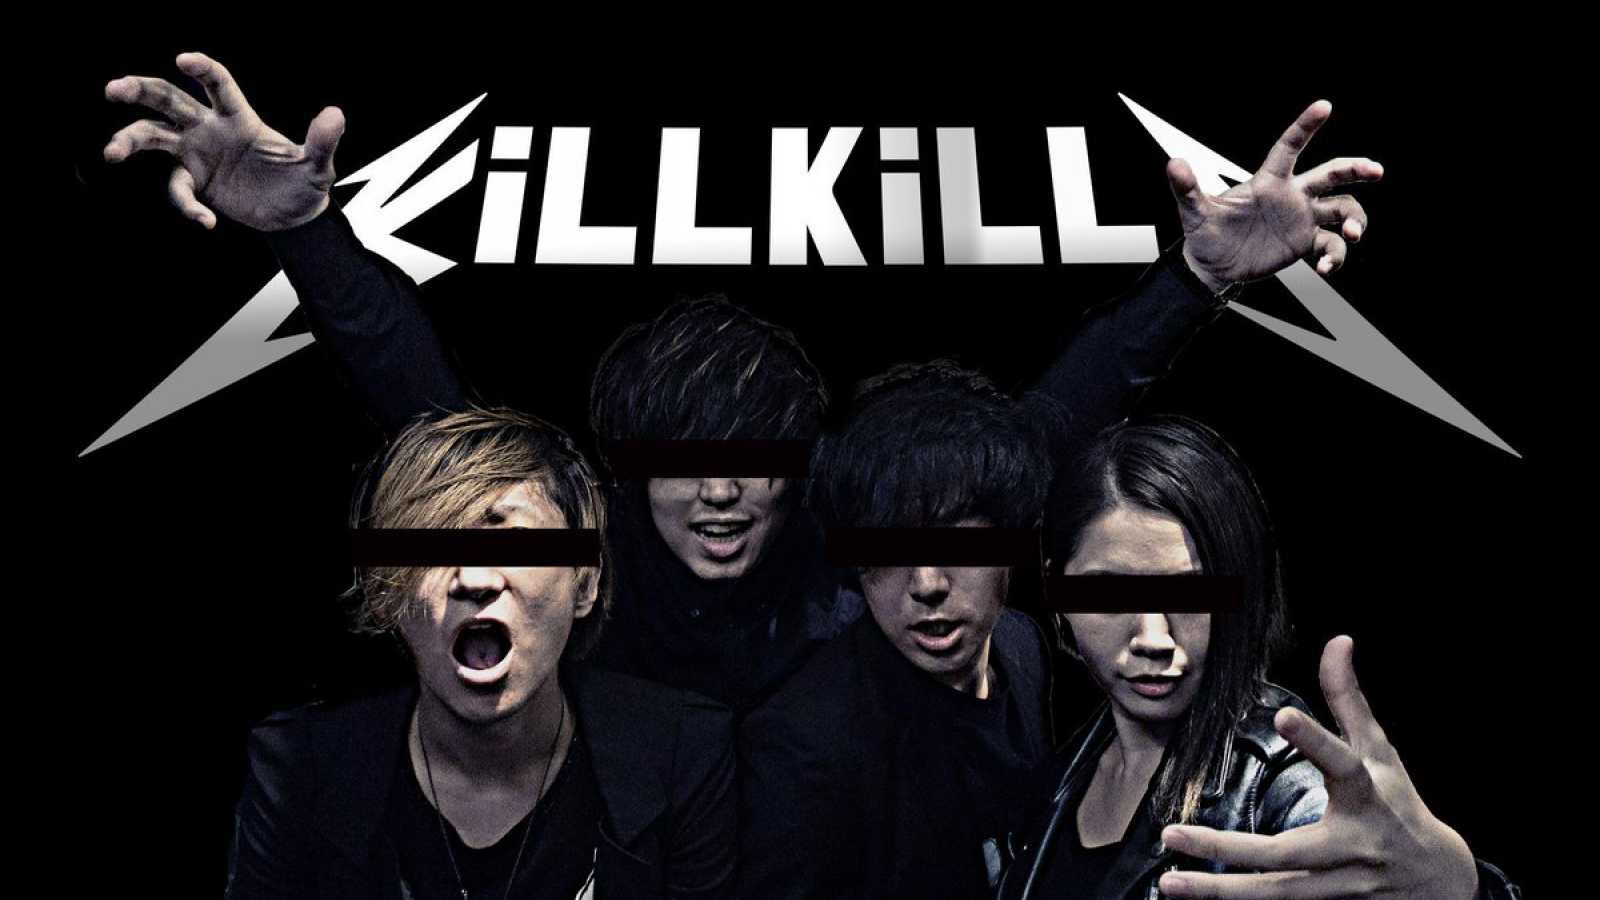 Crucify, novo single do KiLLKiLLS, está disponível mundialmente © Splatter Records